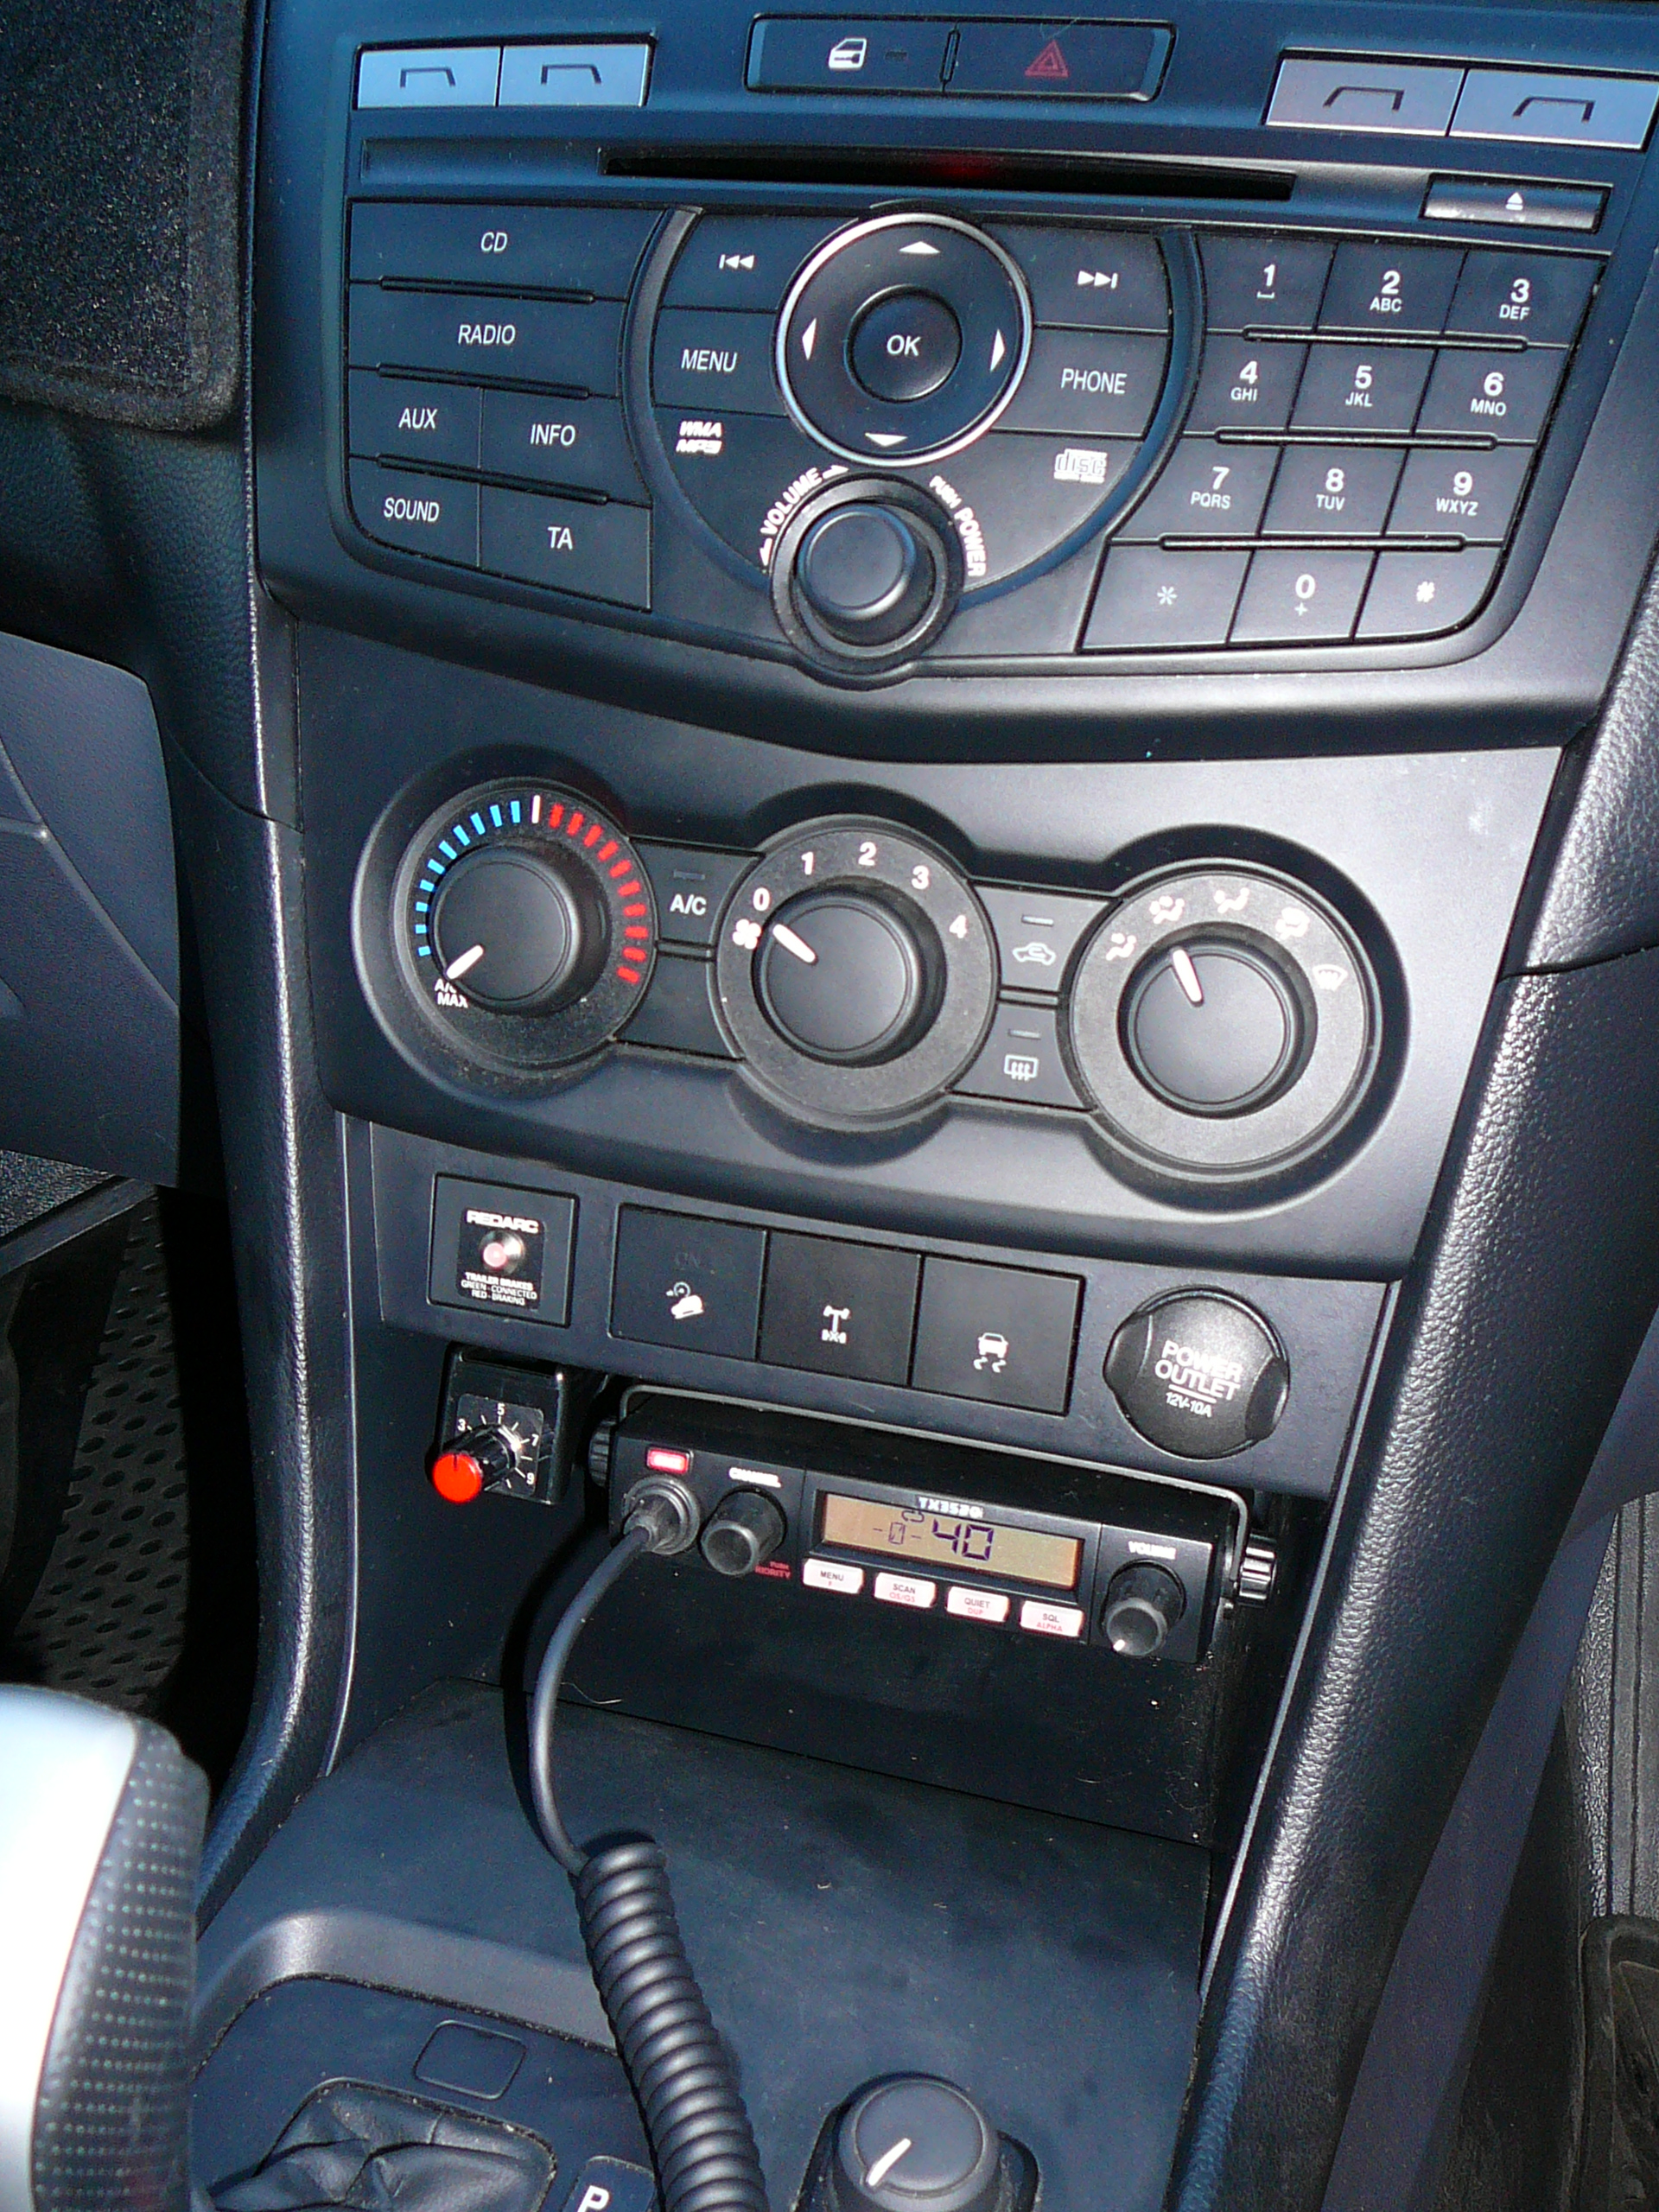 Mazda BT-50 2012 Battery Monitor, Navigation, Reverse Camera, Elec Brake controller